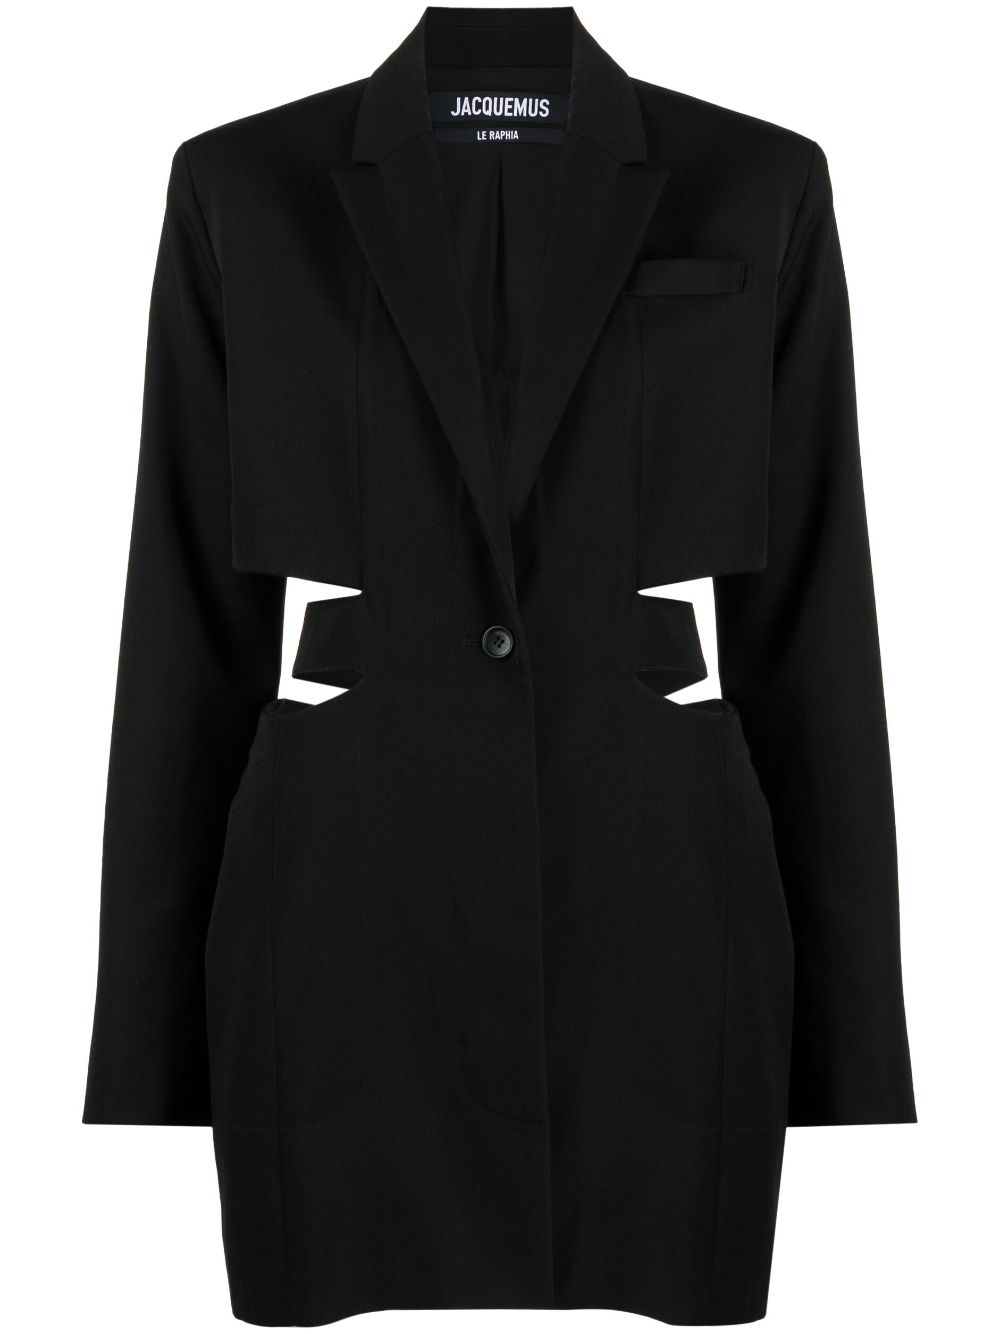 Jacquemus La robe Bari blazer mini dress - Black von Jacquemus